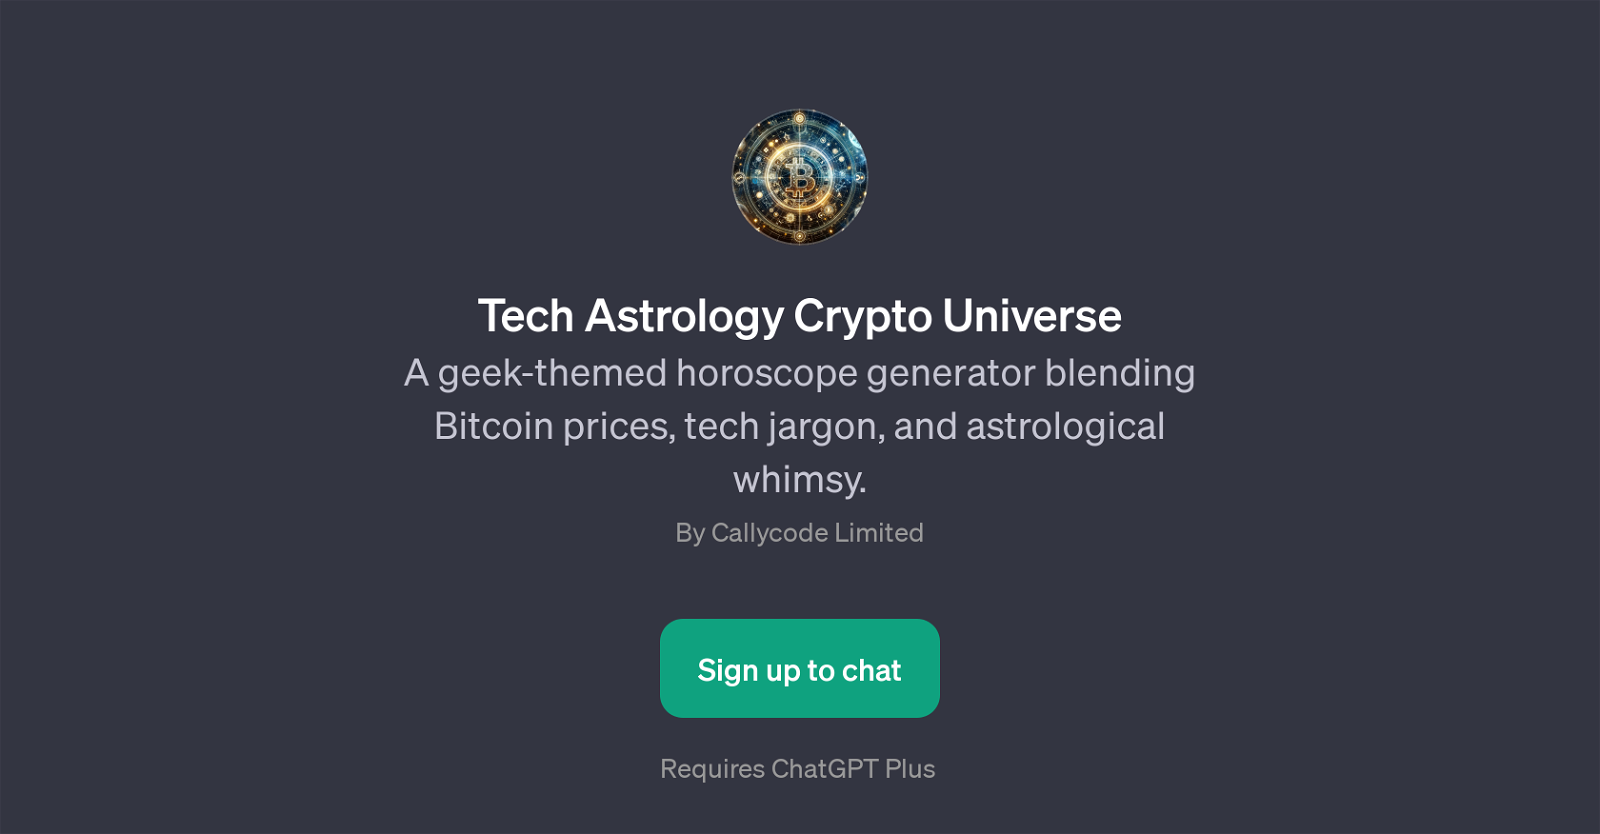 Tech Astrology Crypto Universe website